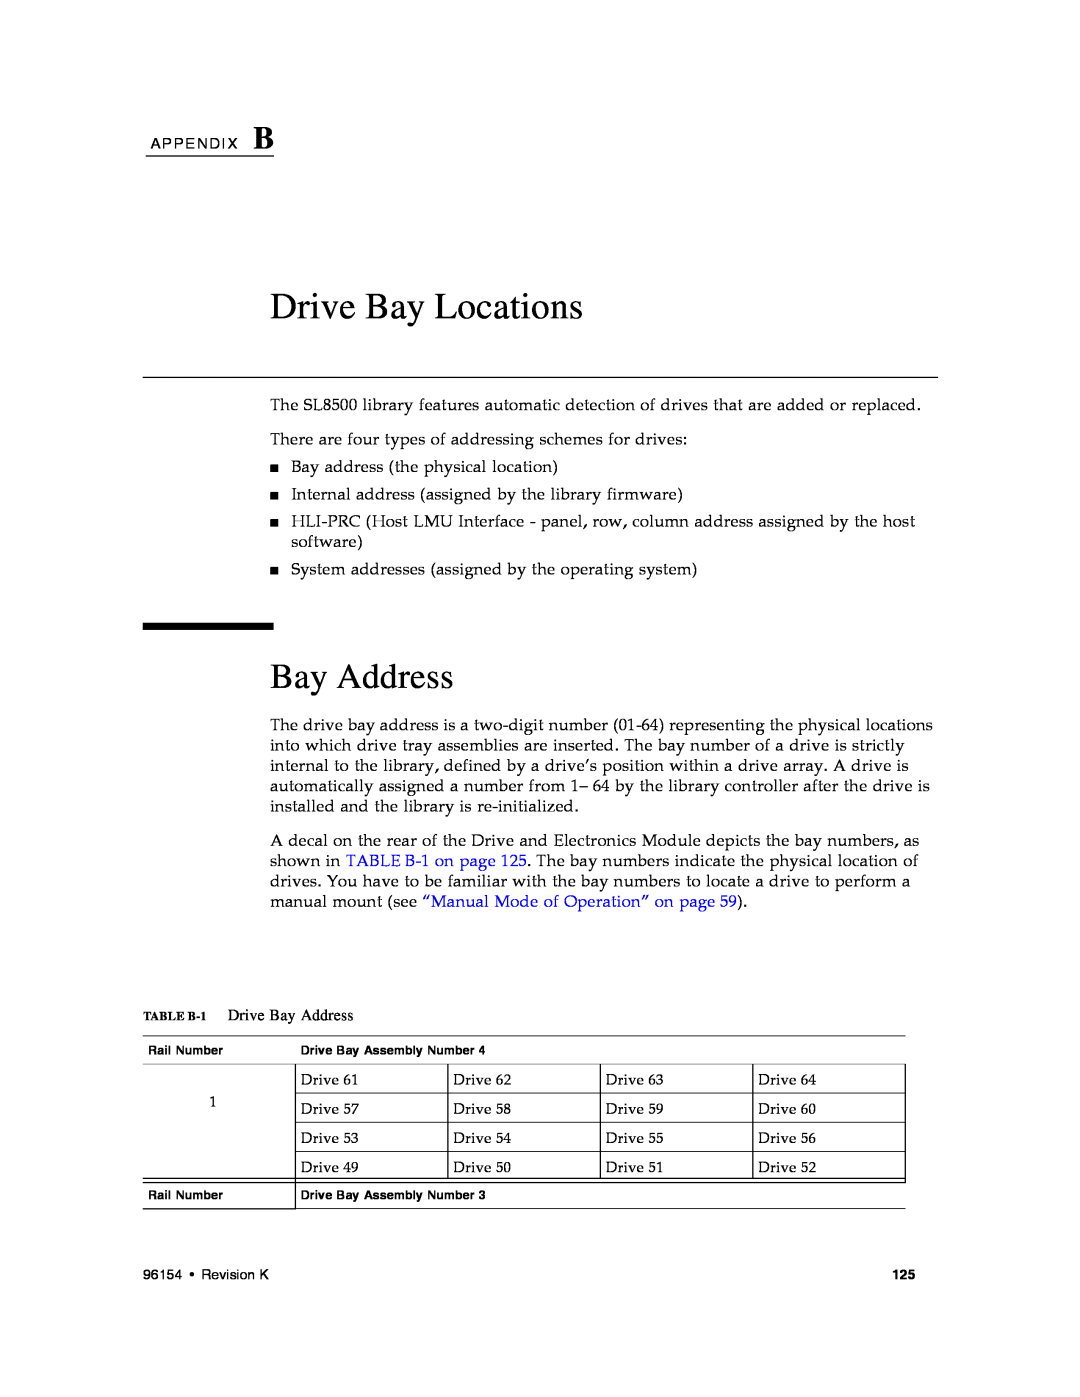 Sun Microsystems SL8500 manual Drive Bay Locations, Bay Address 